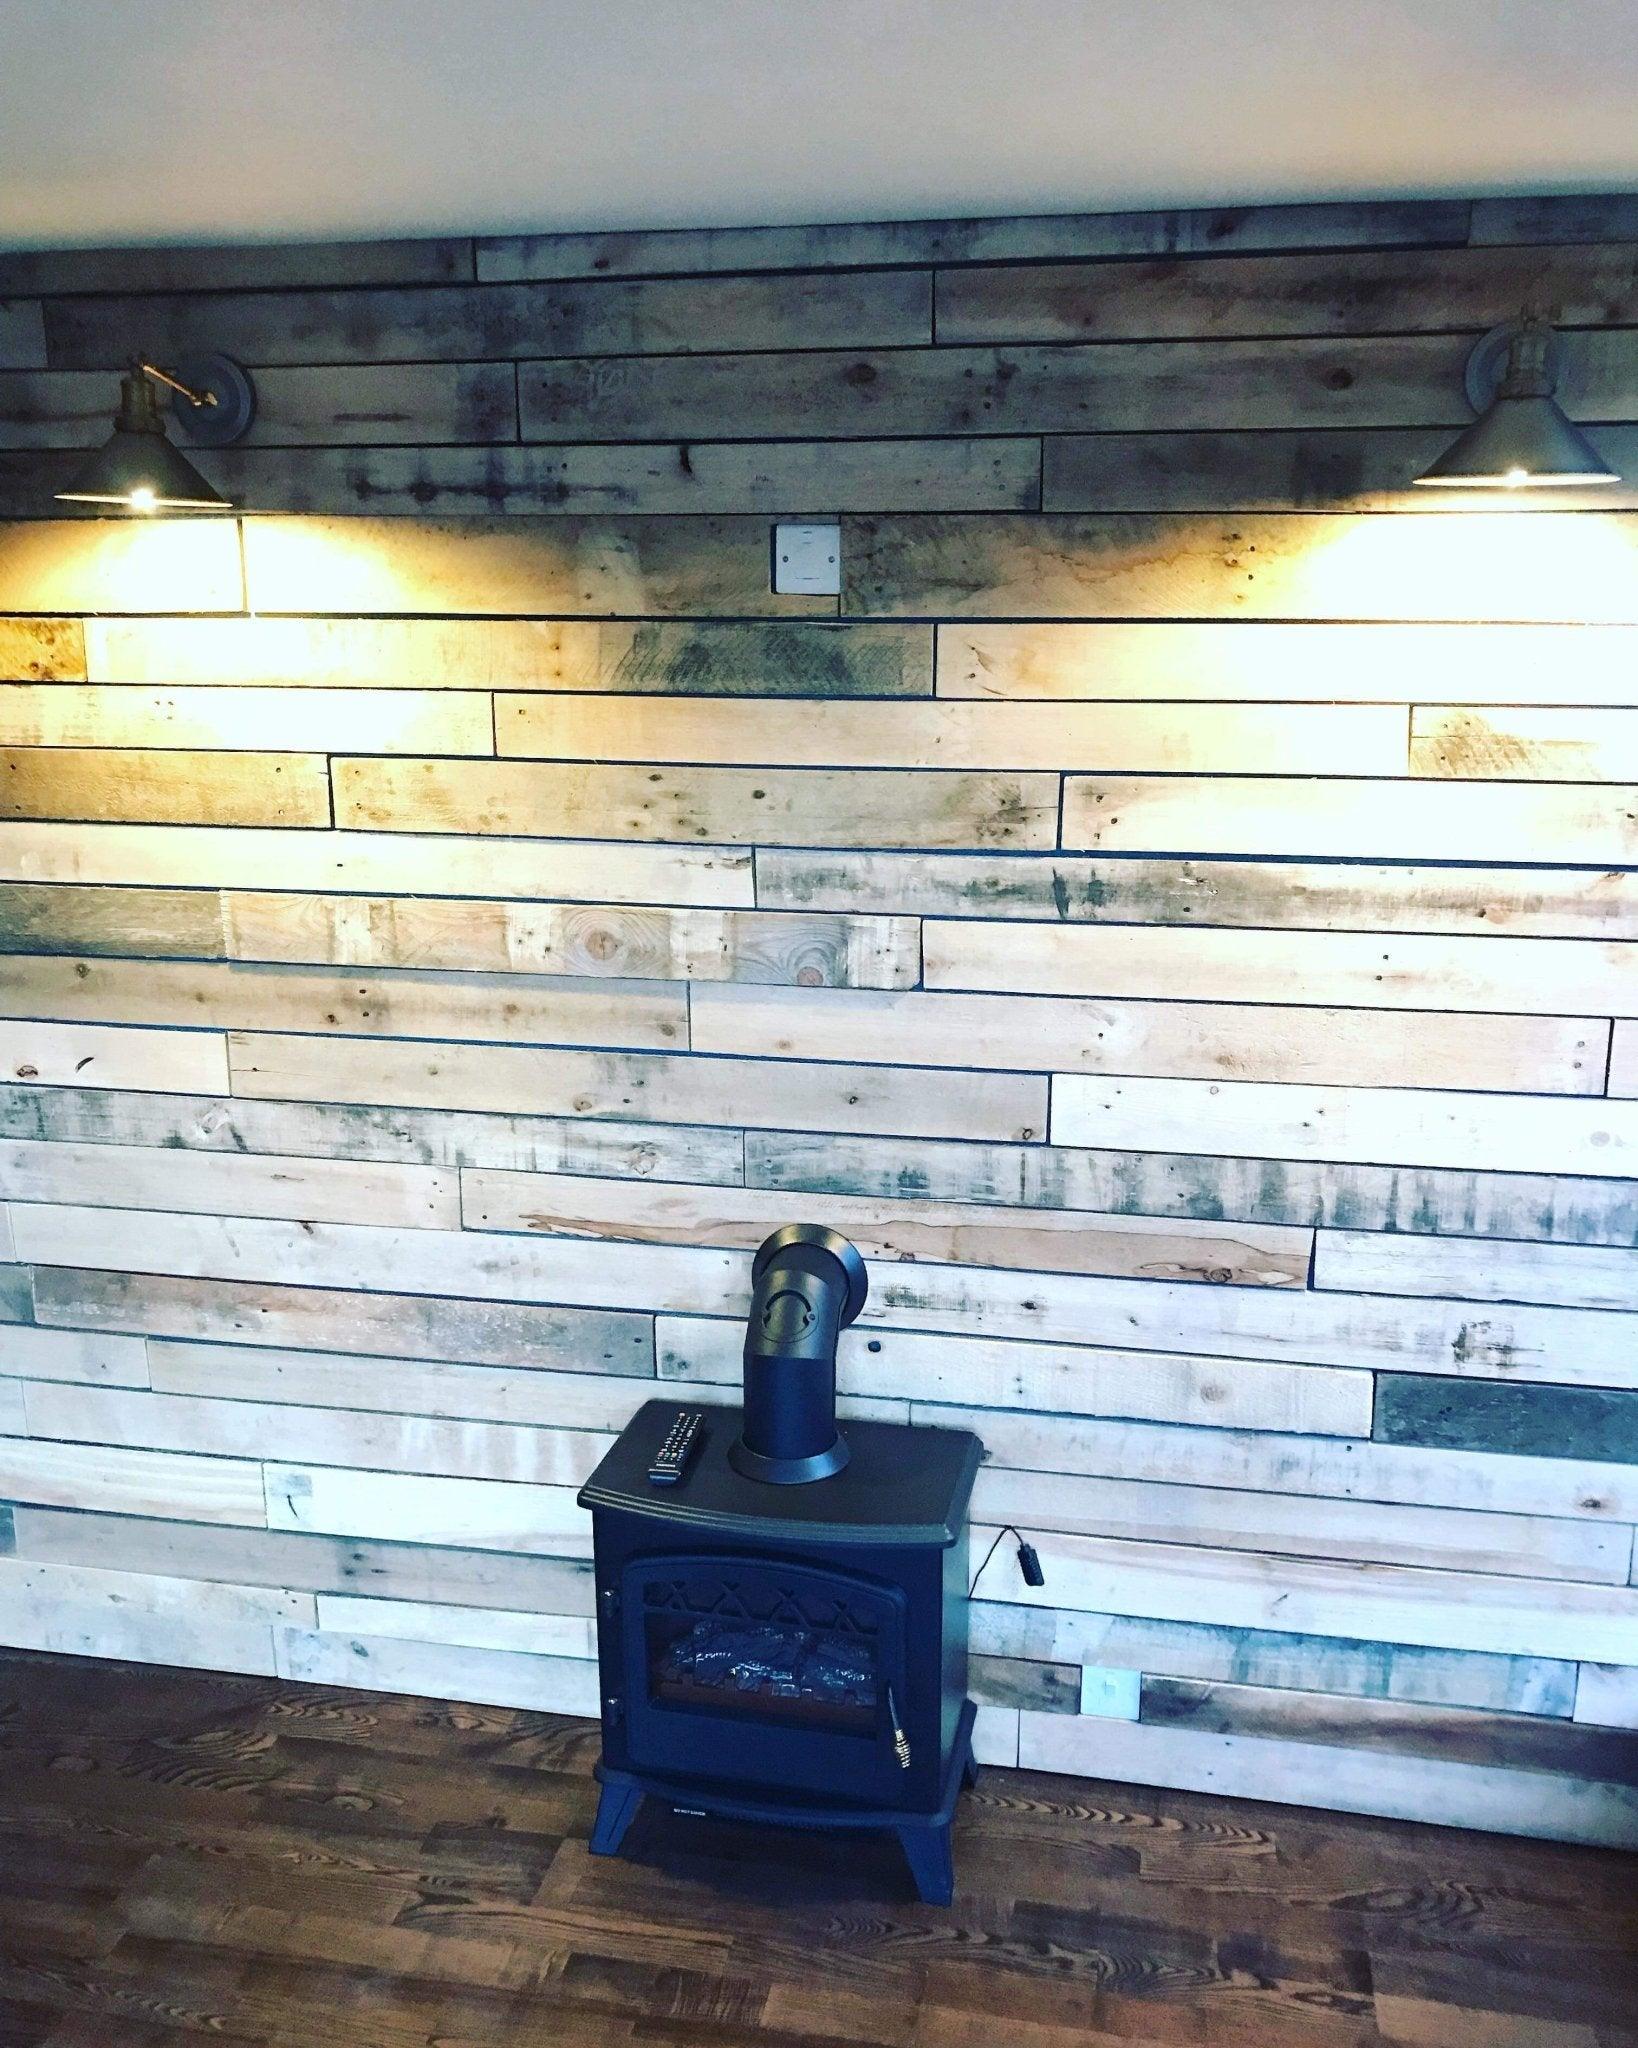 Rustic Reclaimed Pallet Planks - Unique Wall Cladding & Flooring - Anpio woods ltd